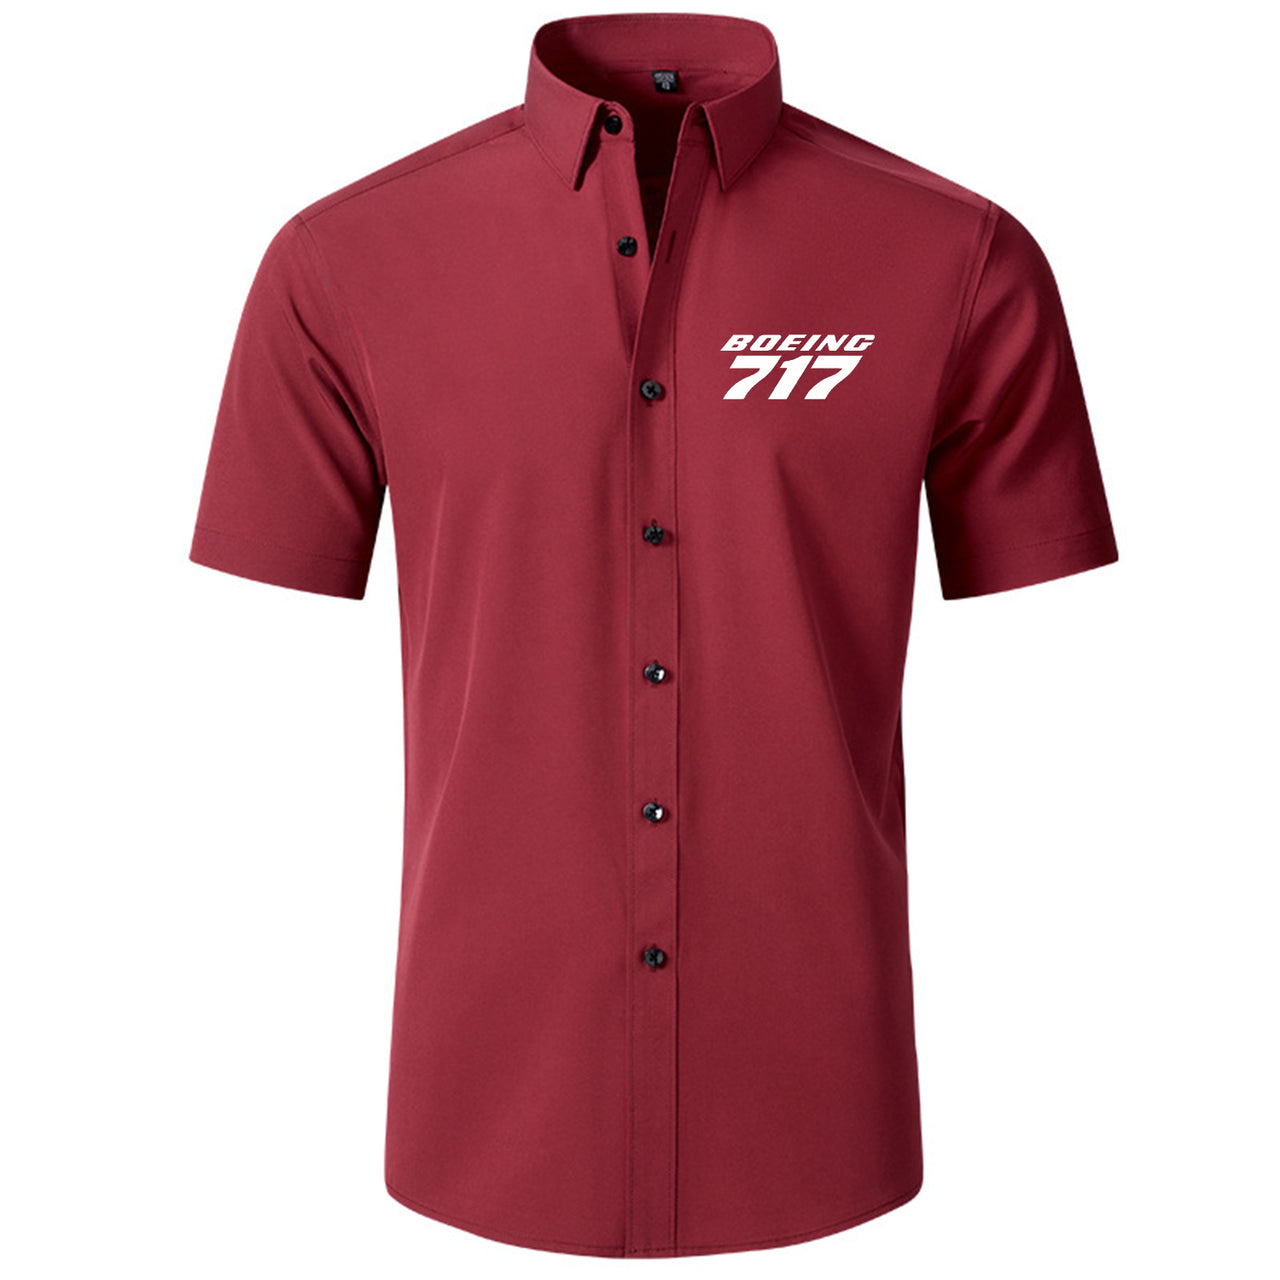 Boeing 717 & Text Designed Short Sleeve Shirts